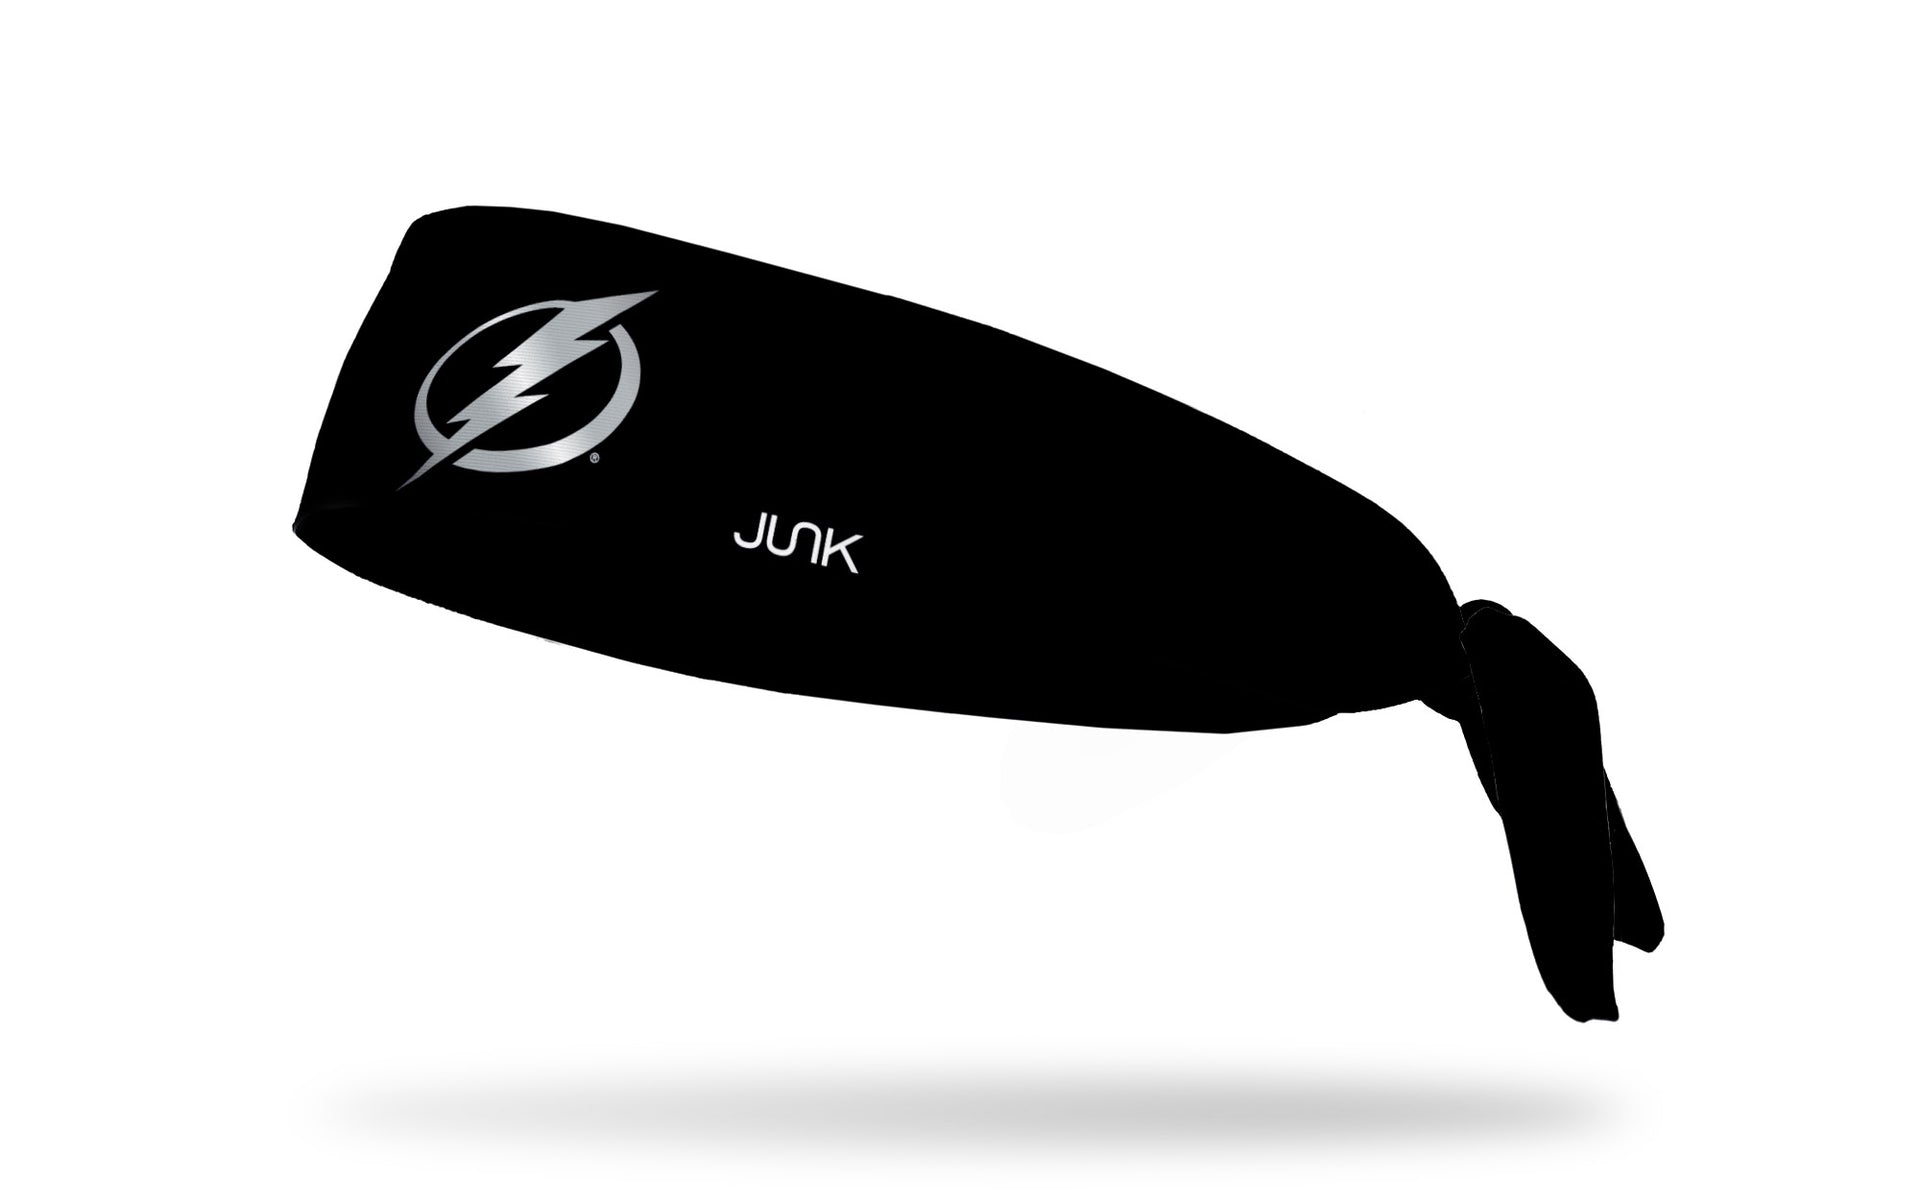 Tampa Bay Lightning: Logo Black Tie Headband - View 1